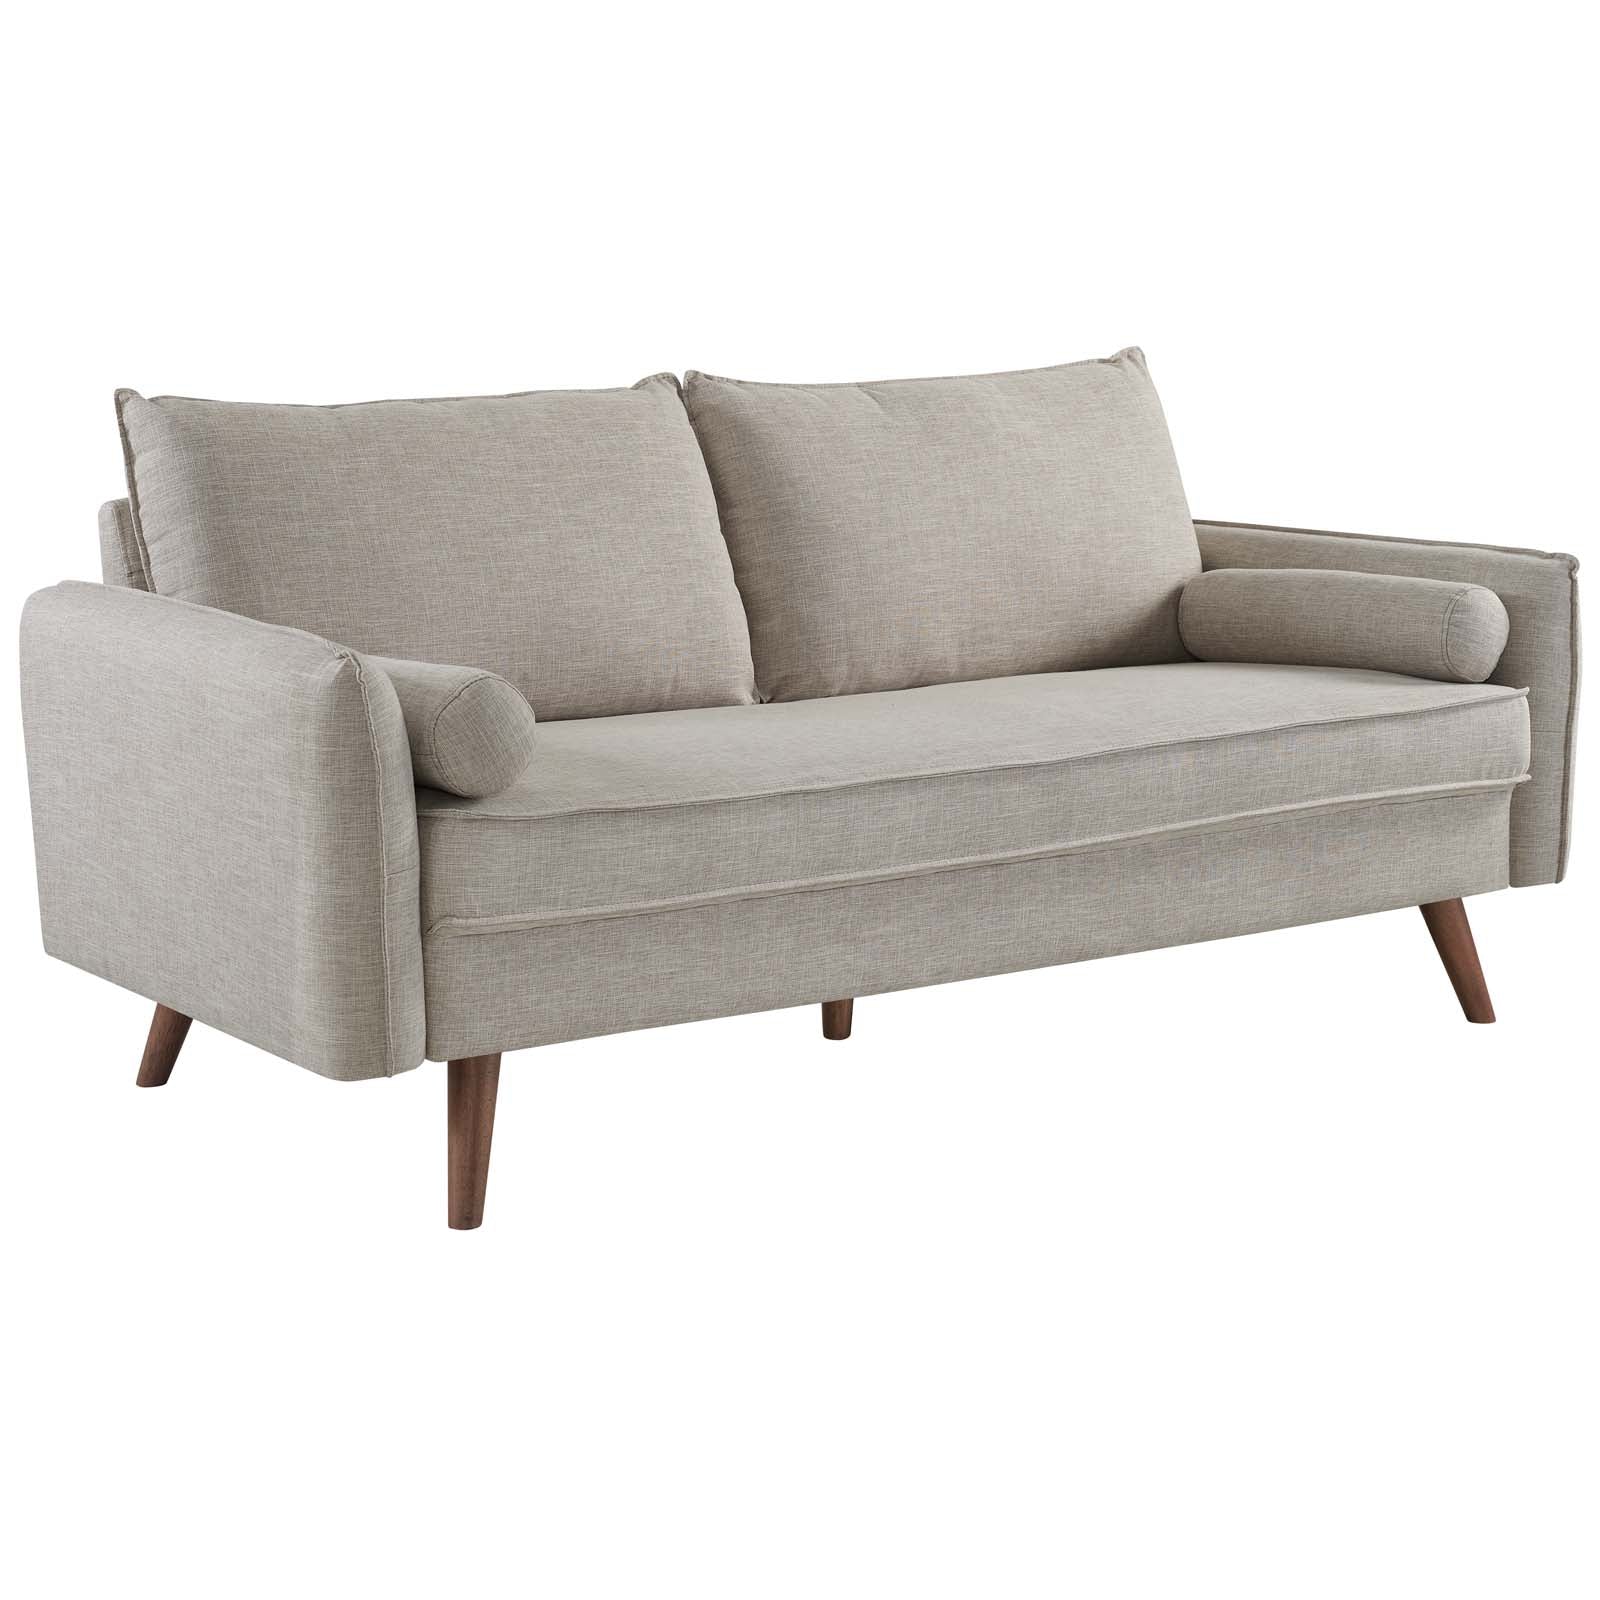 Revive Upholstered Fabric Sofa - East Shore Modern Home Furnishings